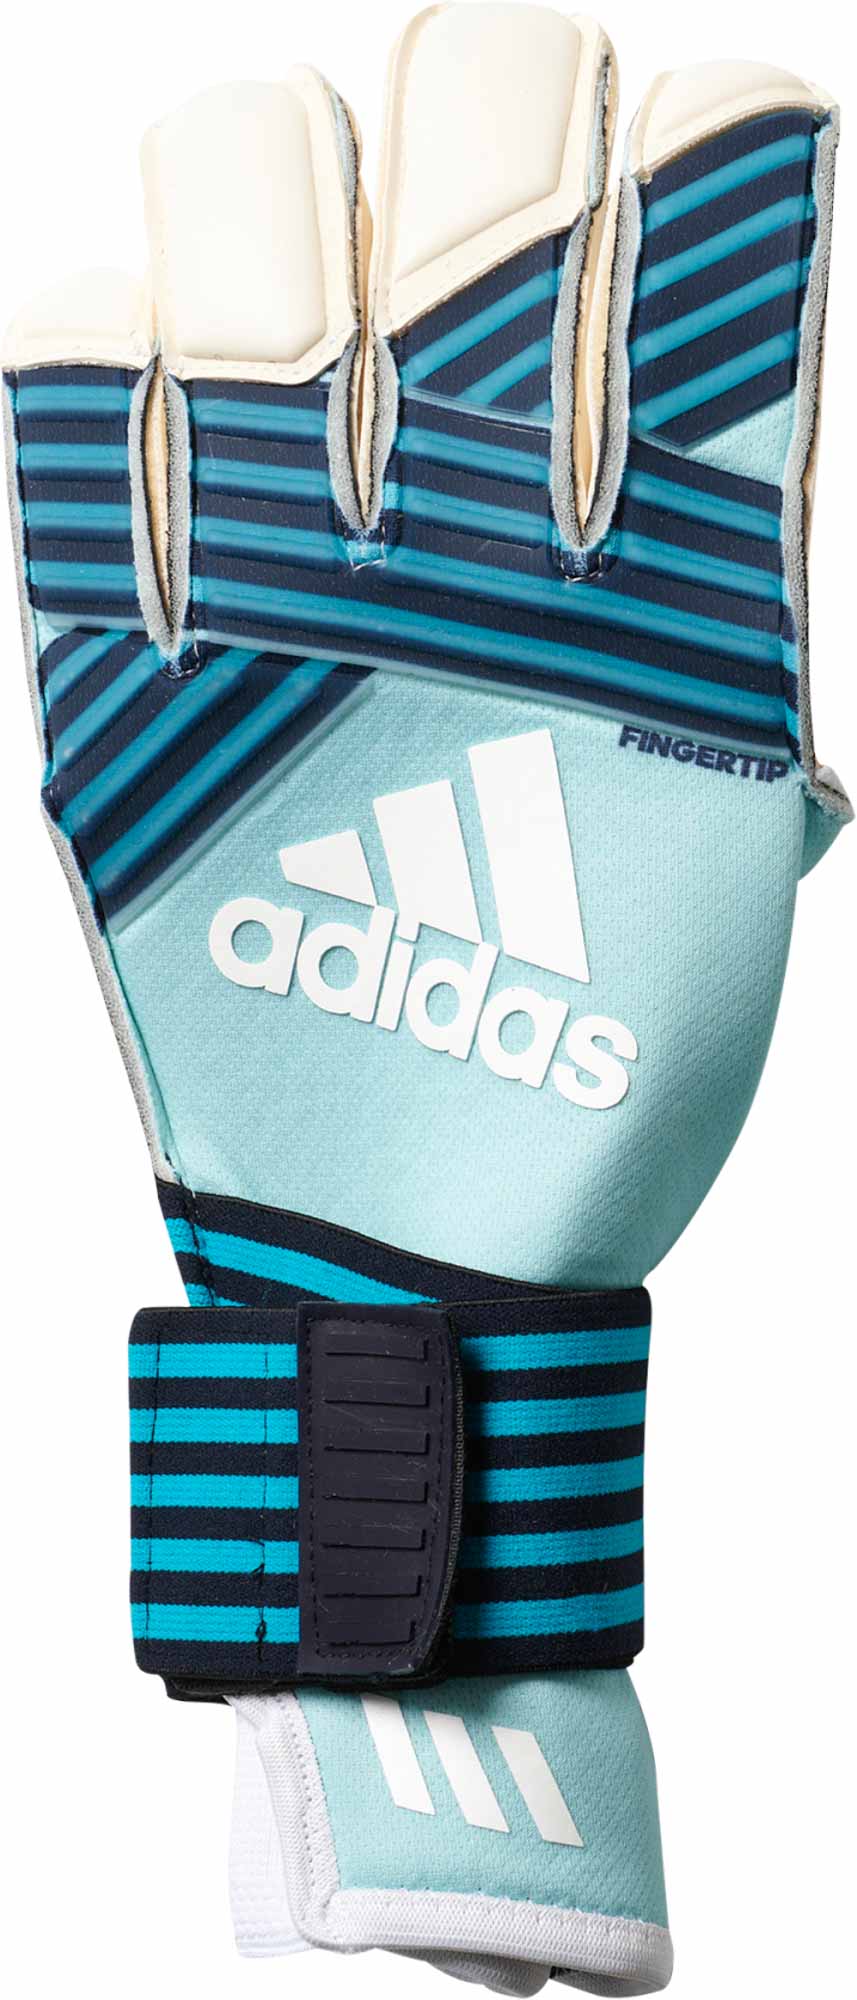 Adidas ACE Trans Fingersave Goalkeeper Gloves Aqua/Energy Blue/Legend islamiyyat.com